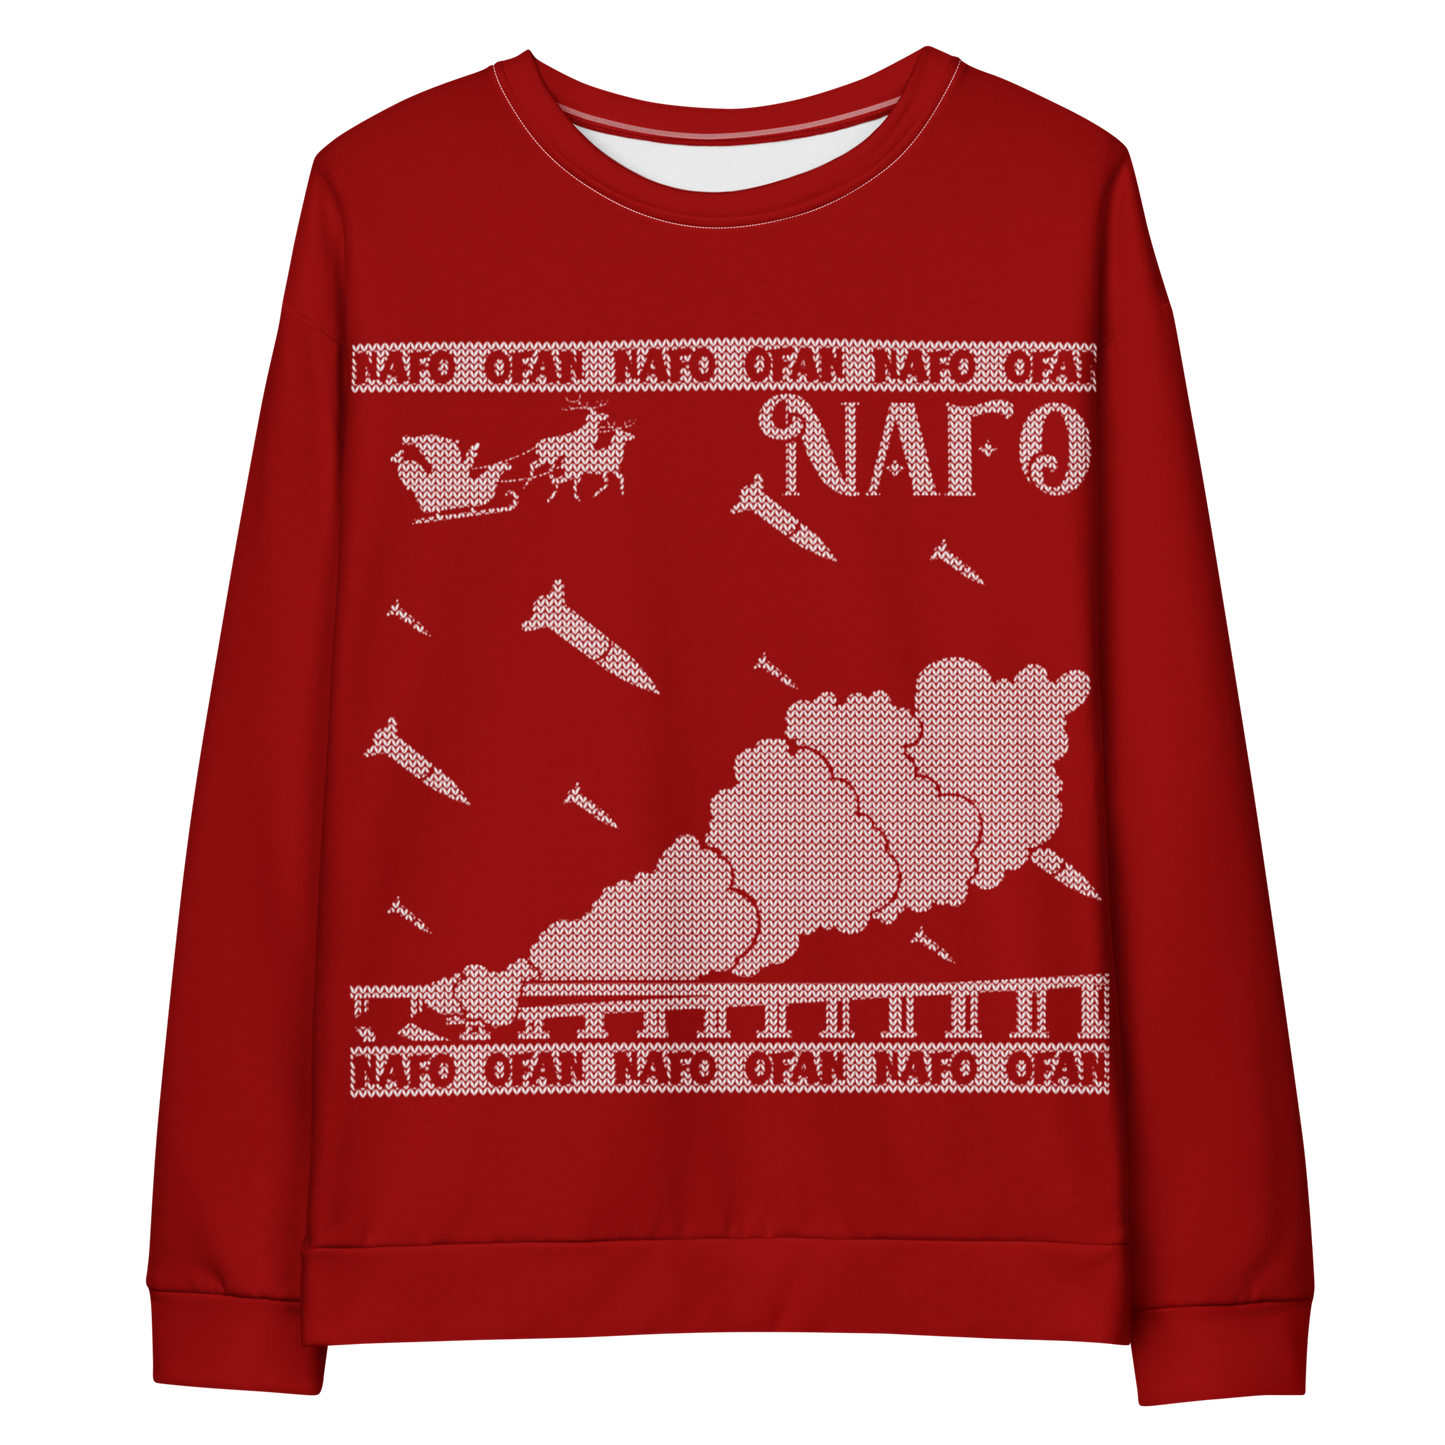 NAFO Crimea Bridge Ugly Sweatshirt